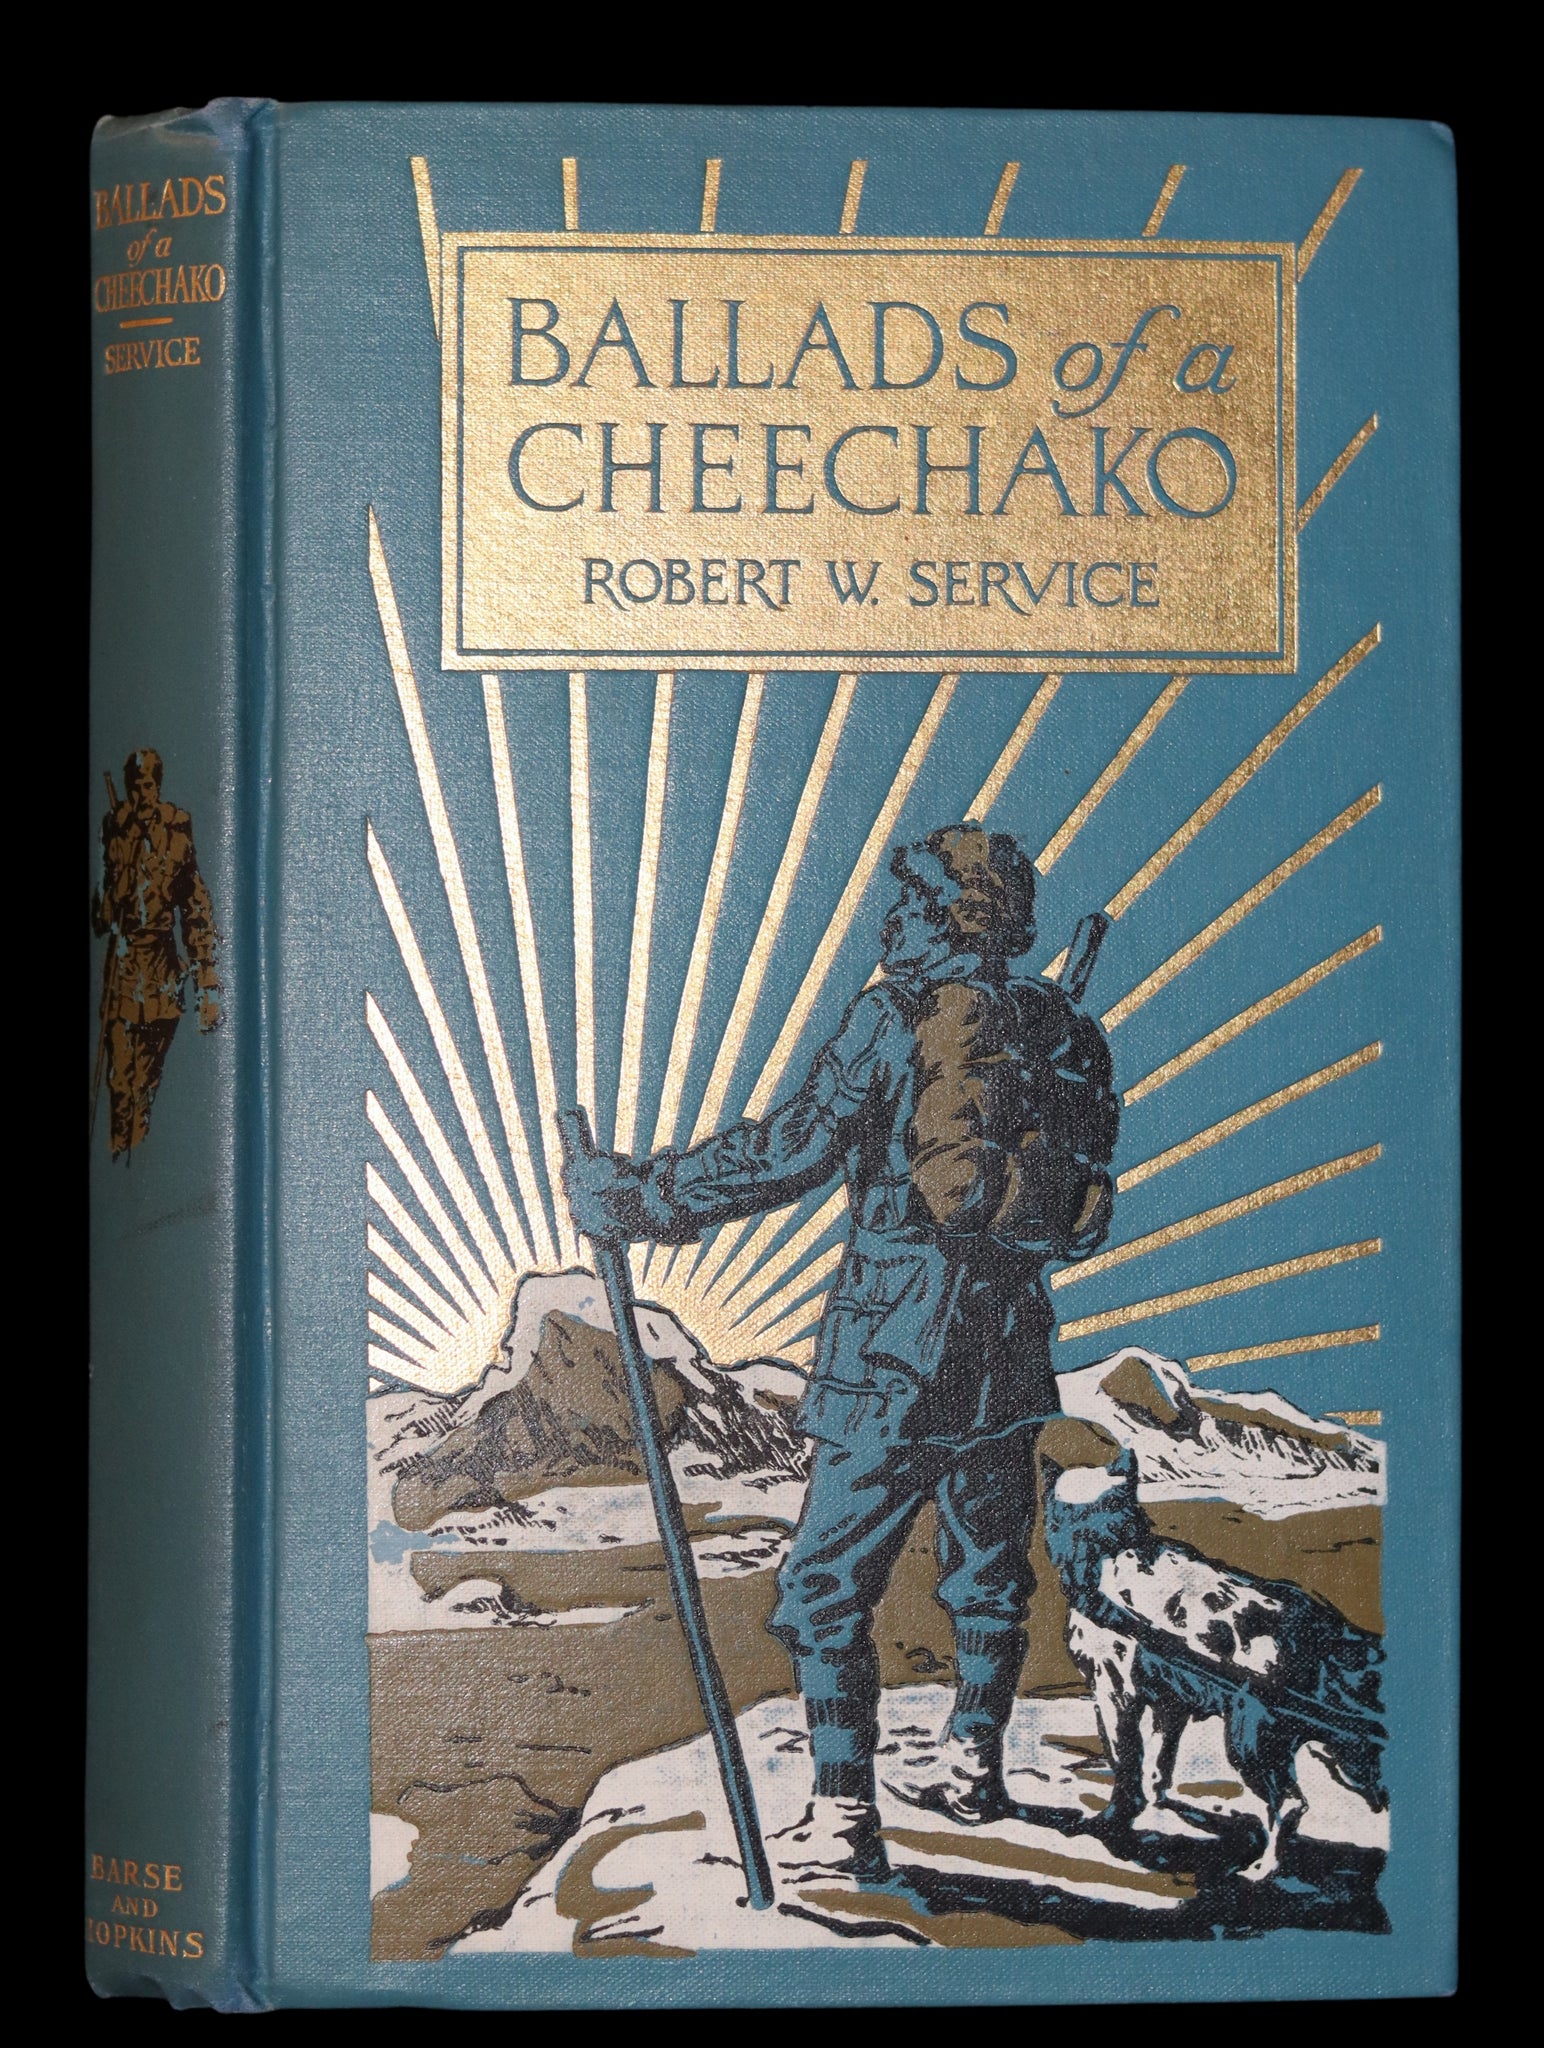 1907 Rare Book - Yukon Gold Rush, BALLADS OF A CHEECHAKO by Robert W. Service. Illustrated.